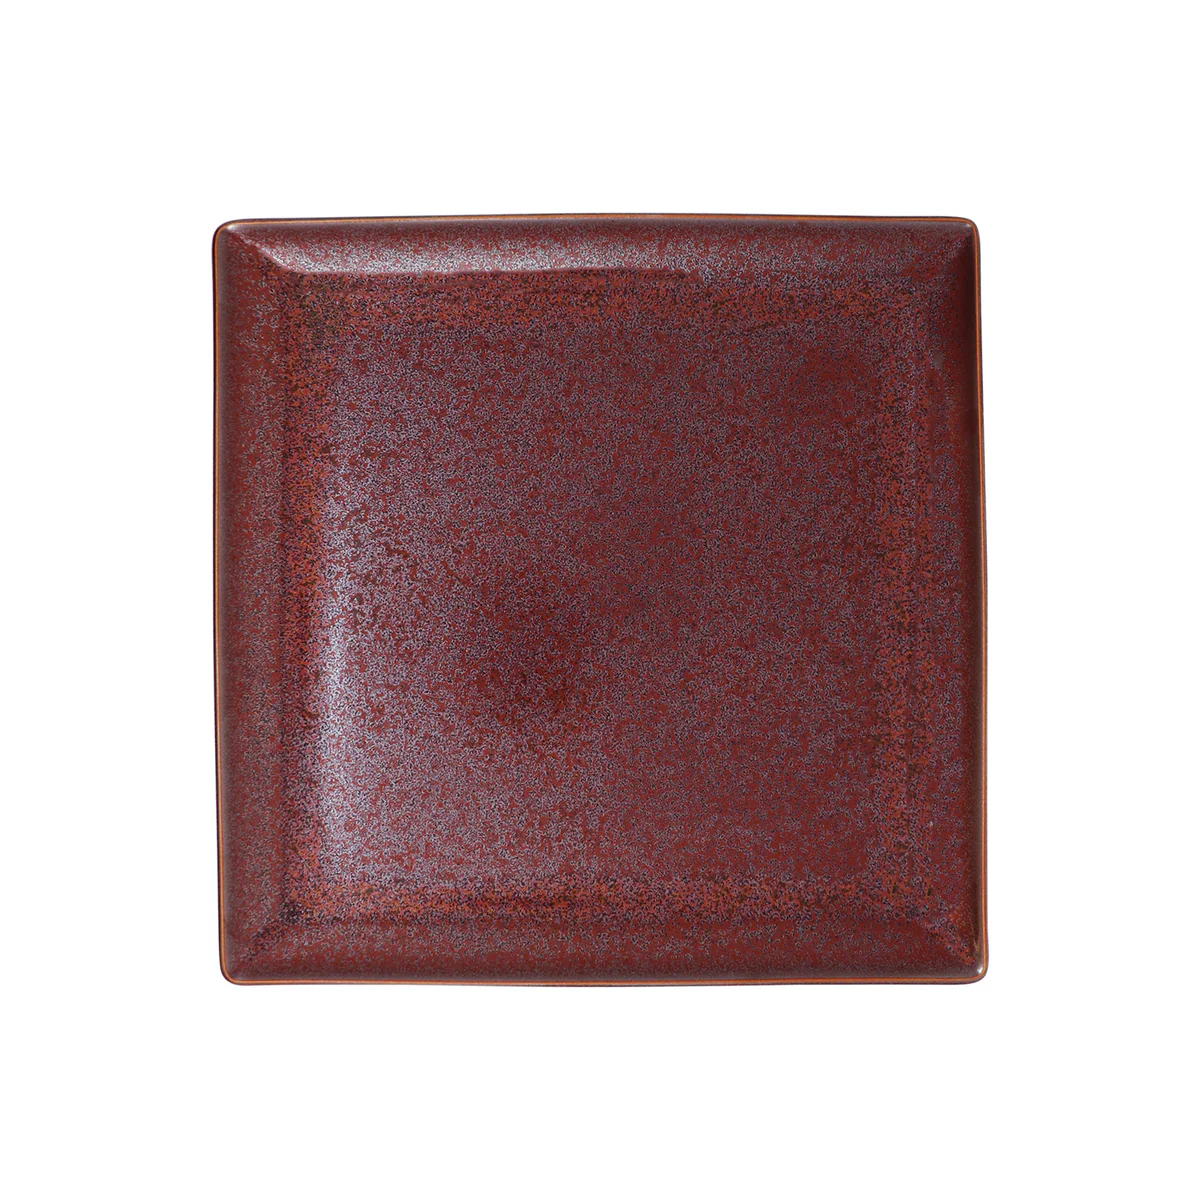 RED GRANITE - Square plate 27 cm                                